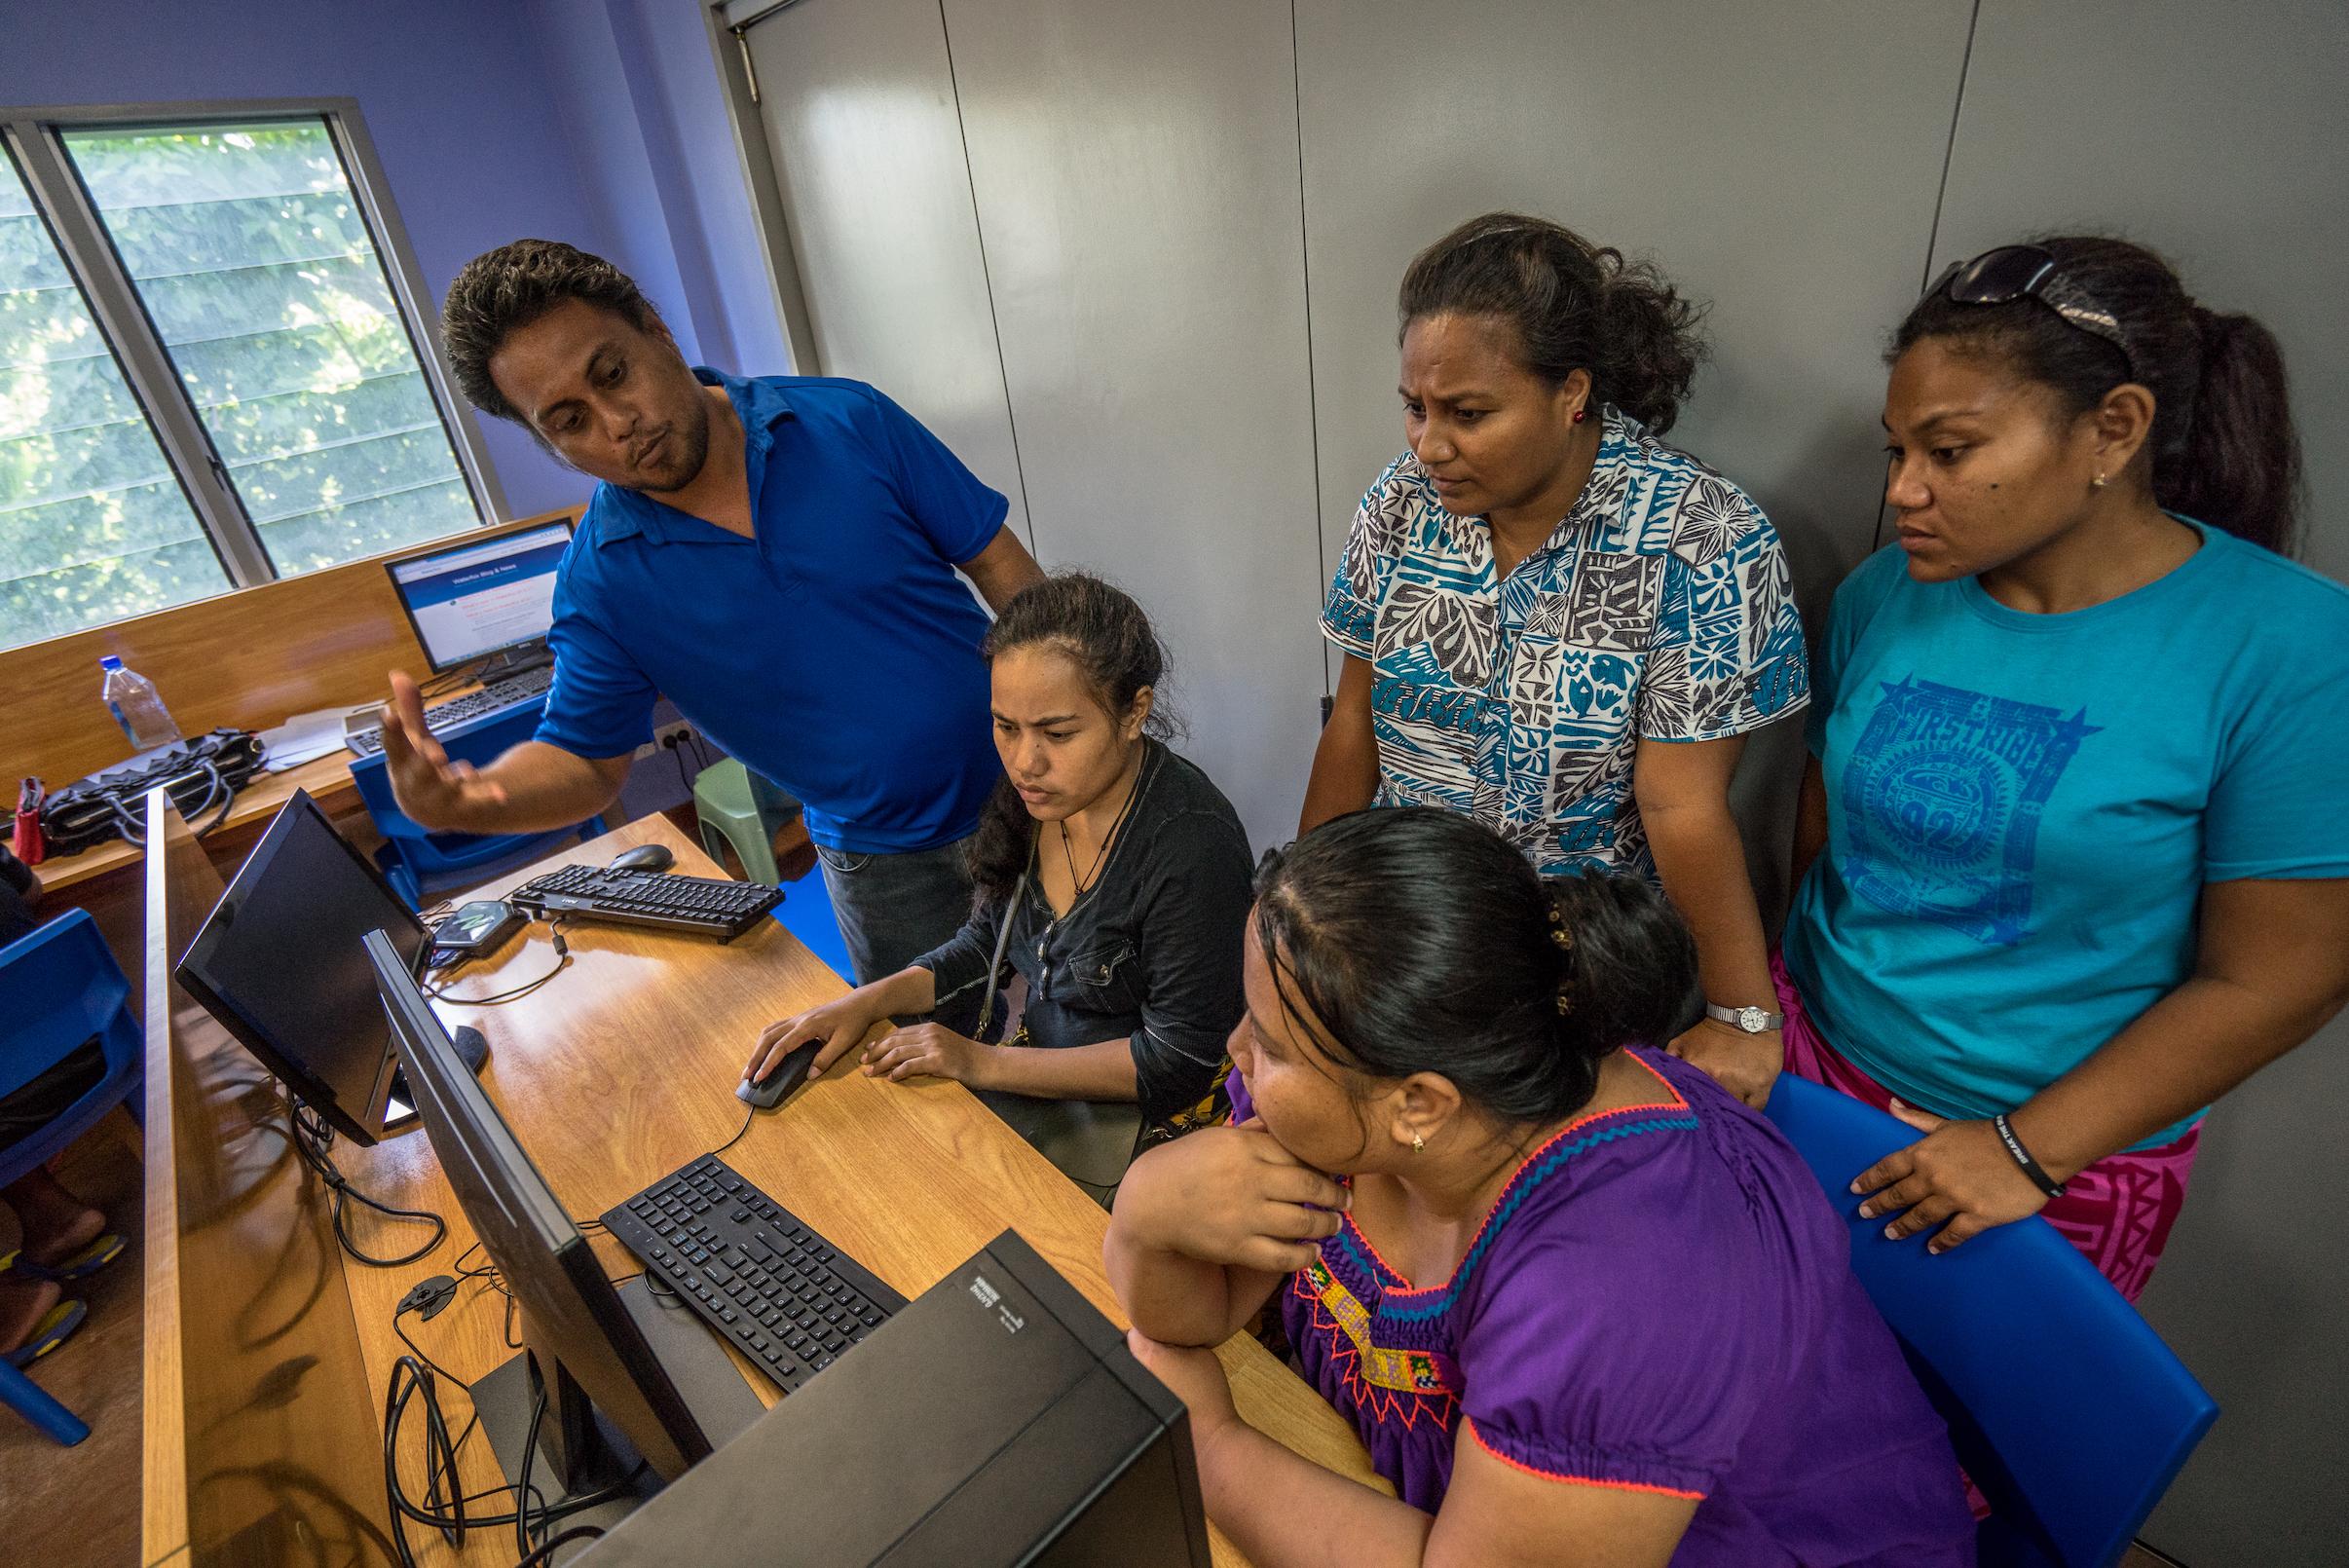 Students expand the ICT-based education in Kiribati.